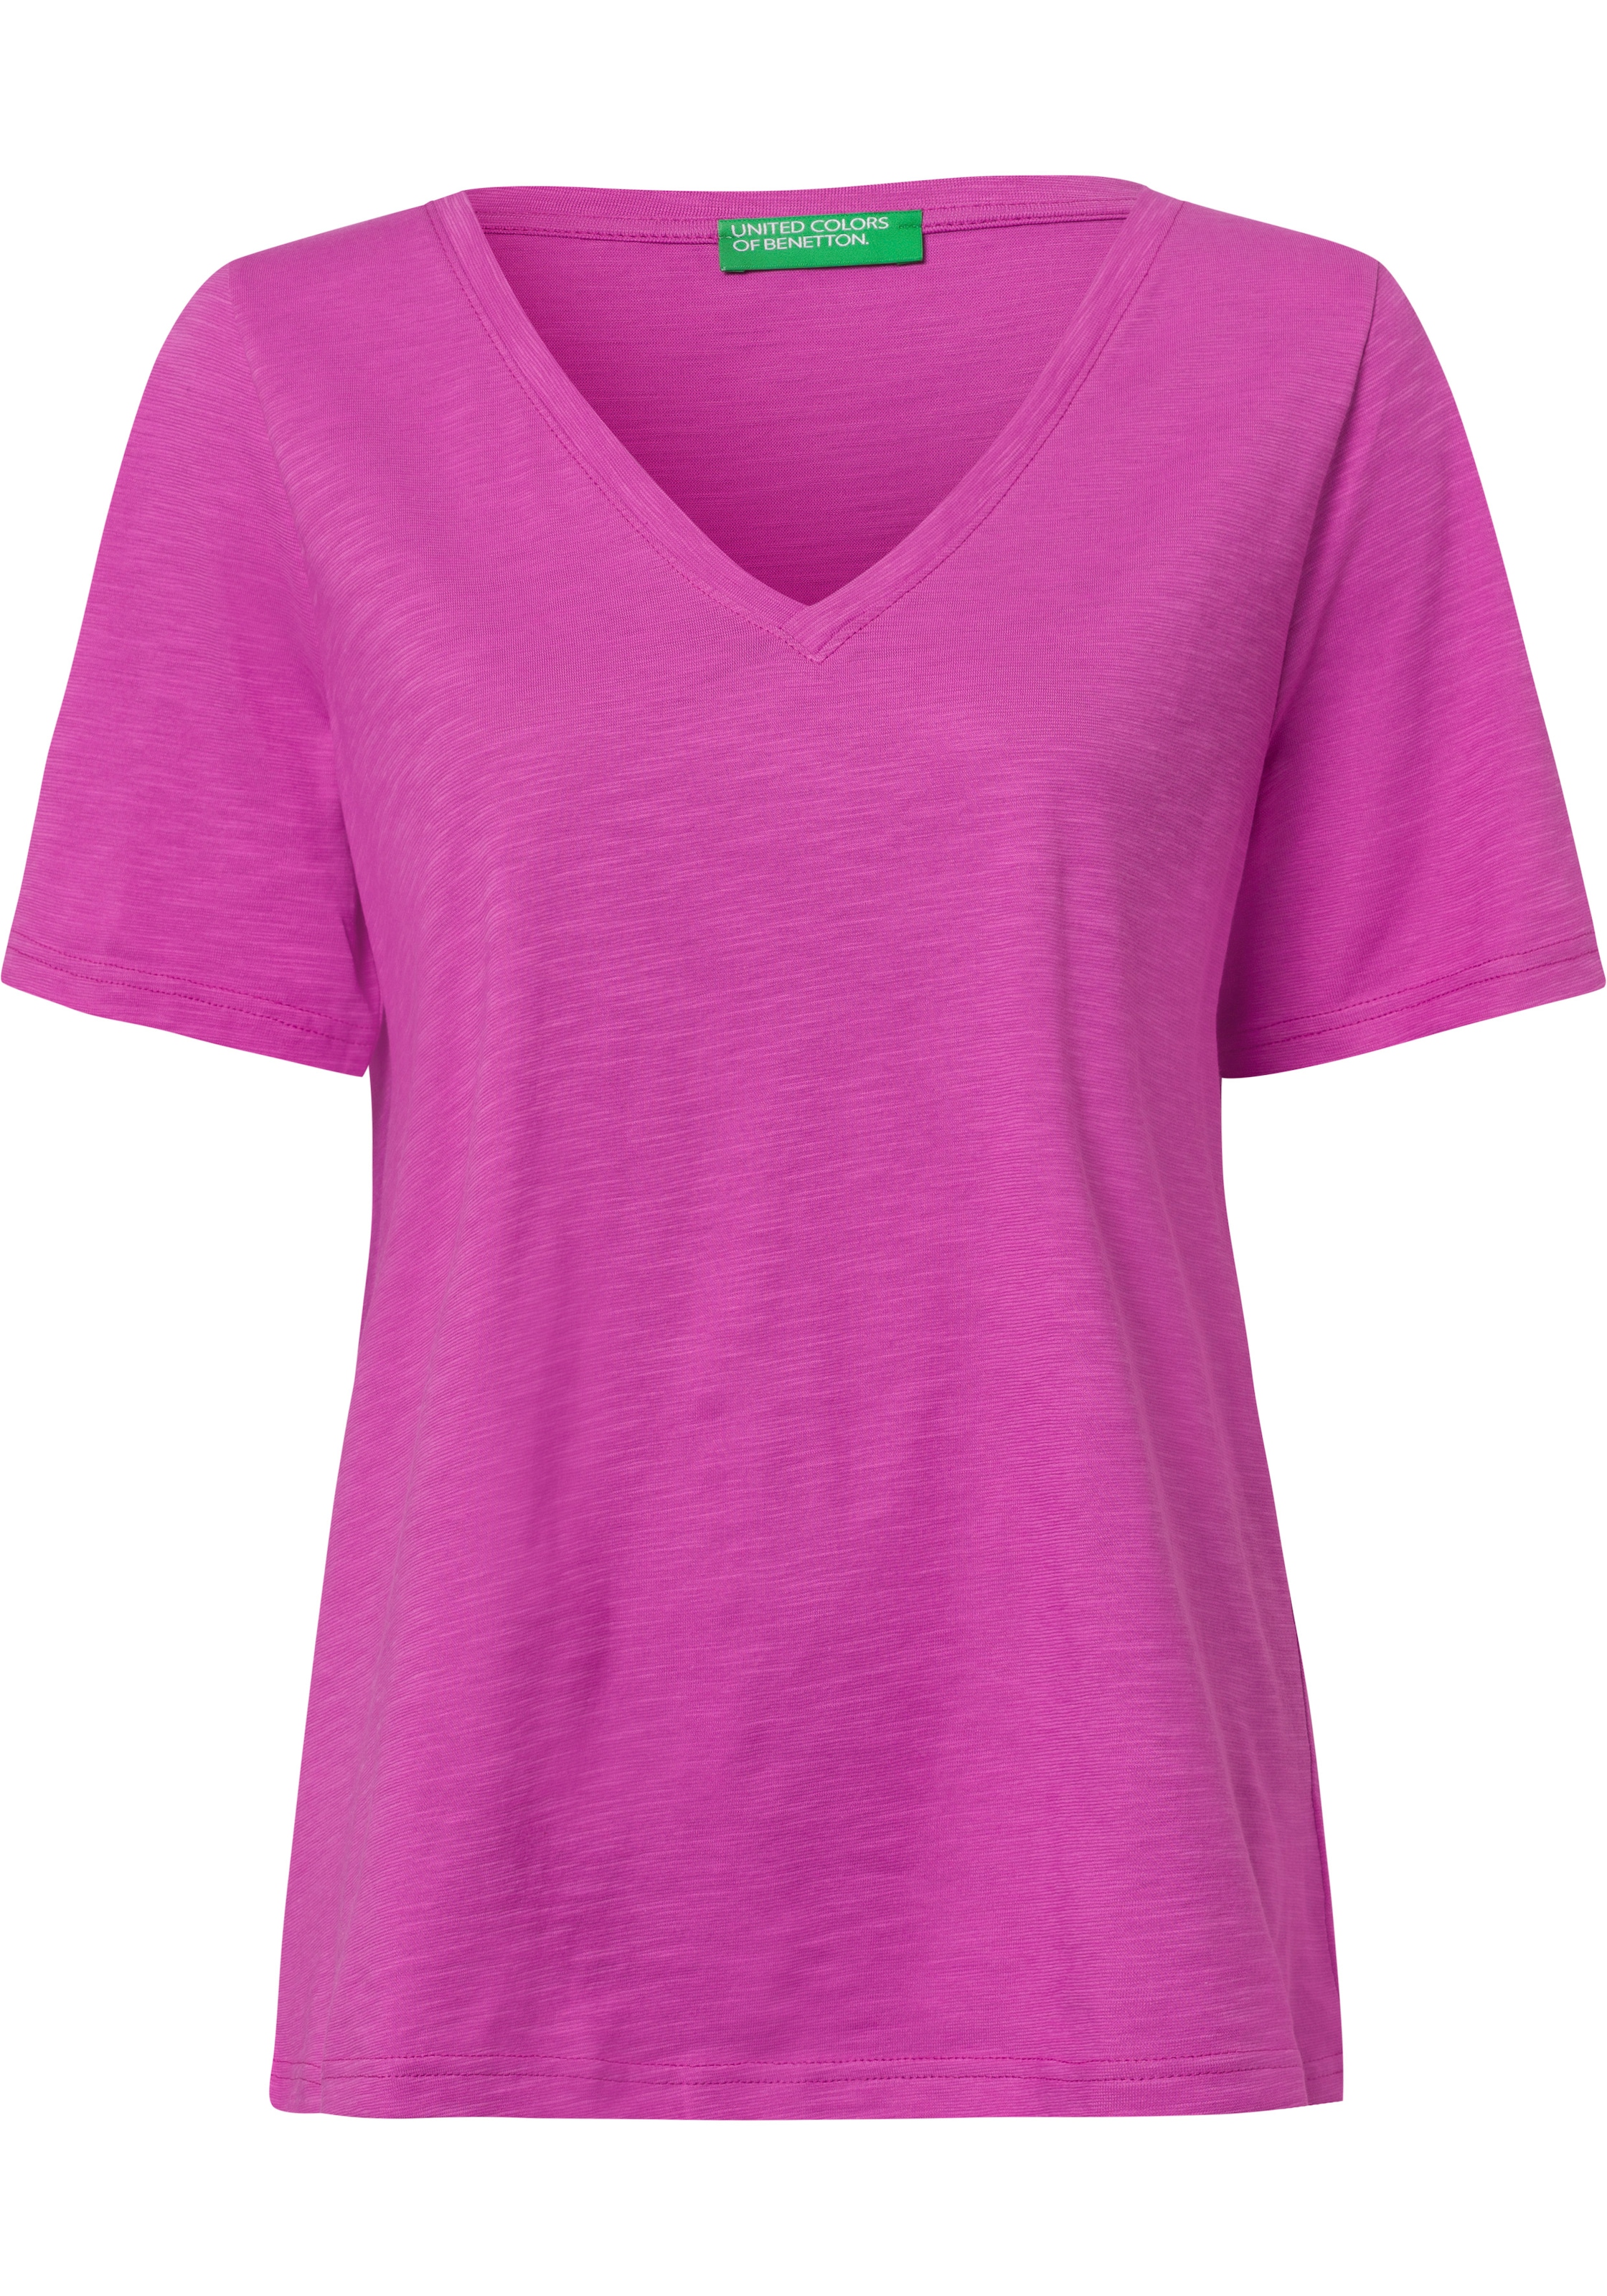 Flammgarnjersey Colors OTTO of United T-Shirt, Benetton bei aus kaufen